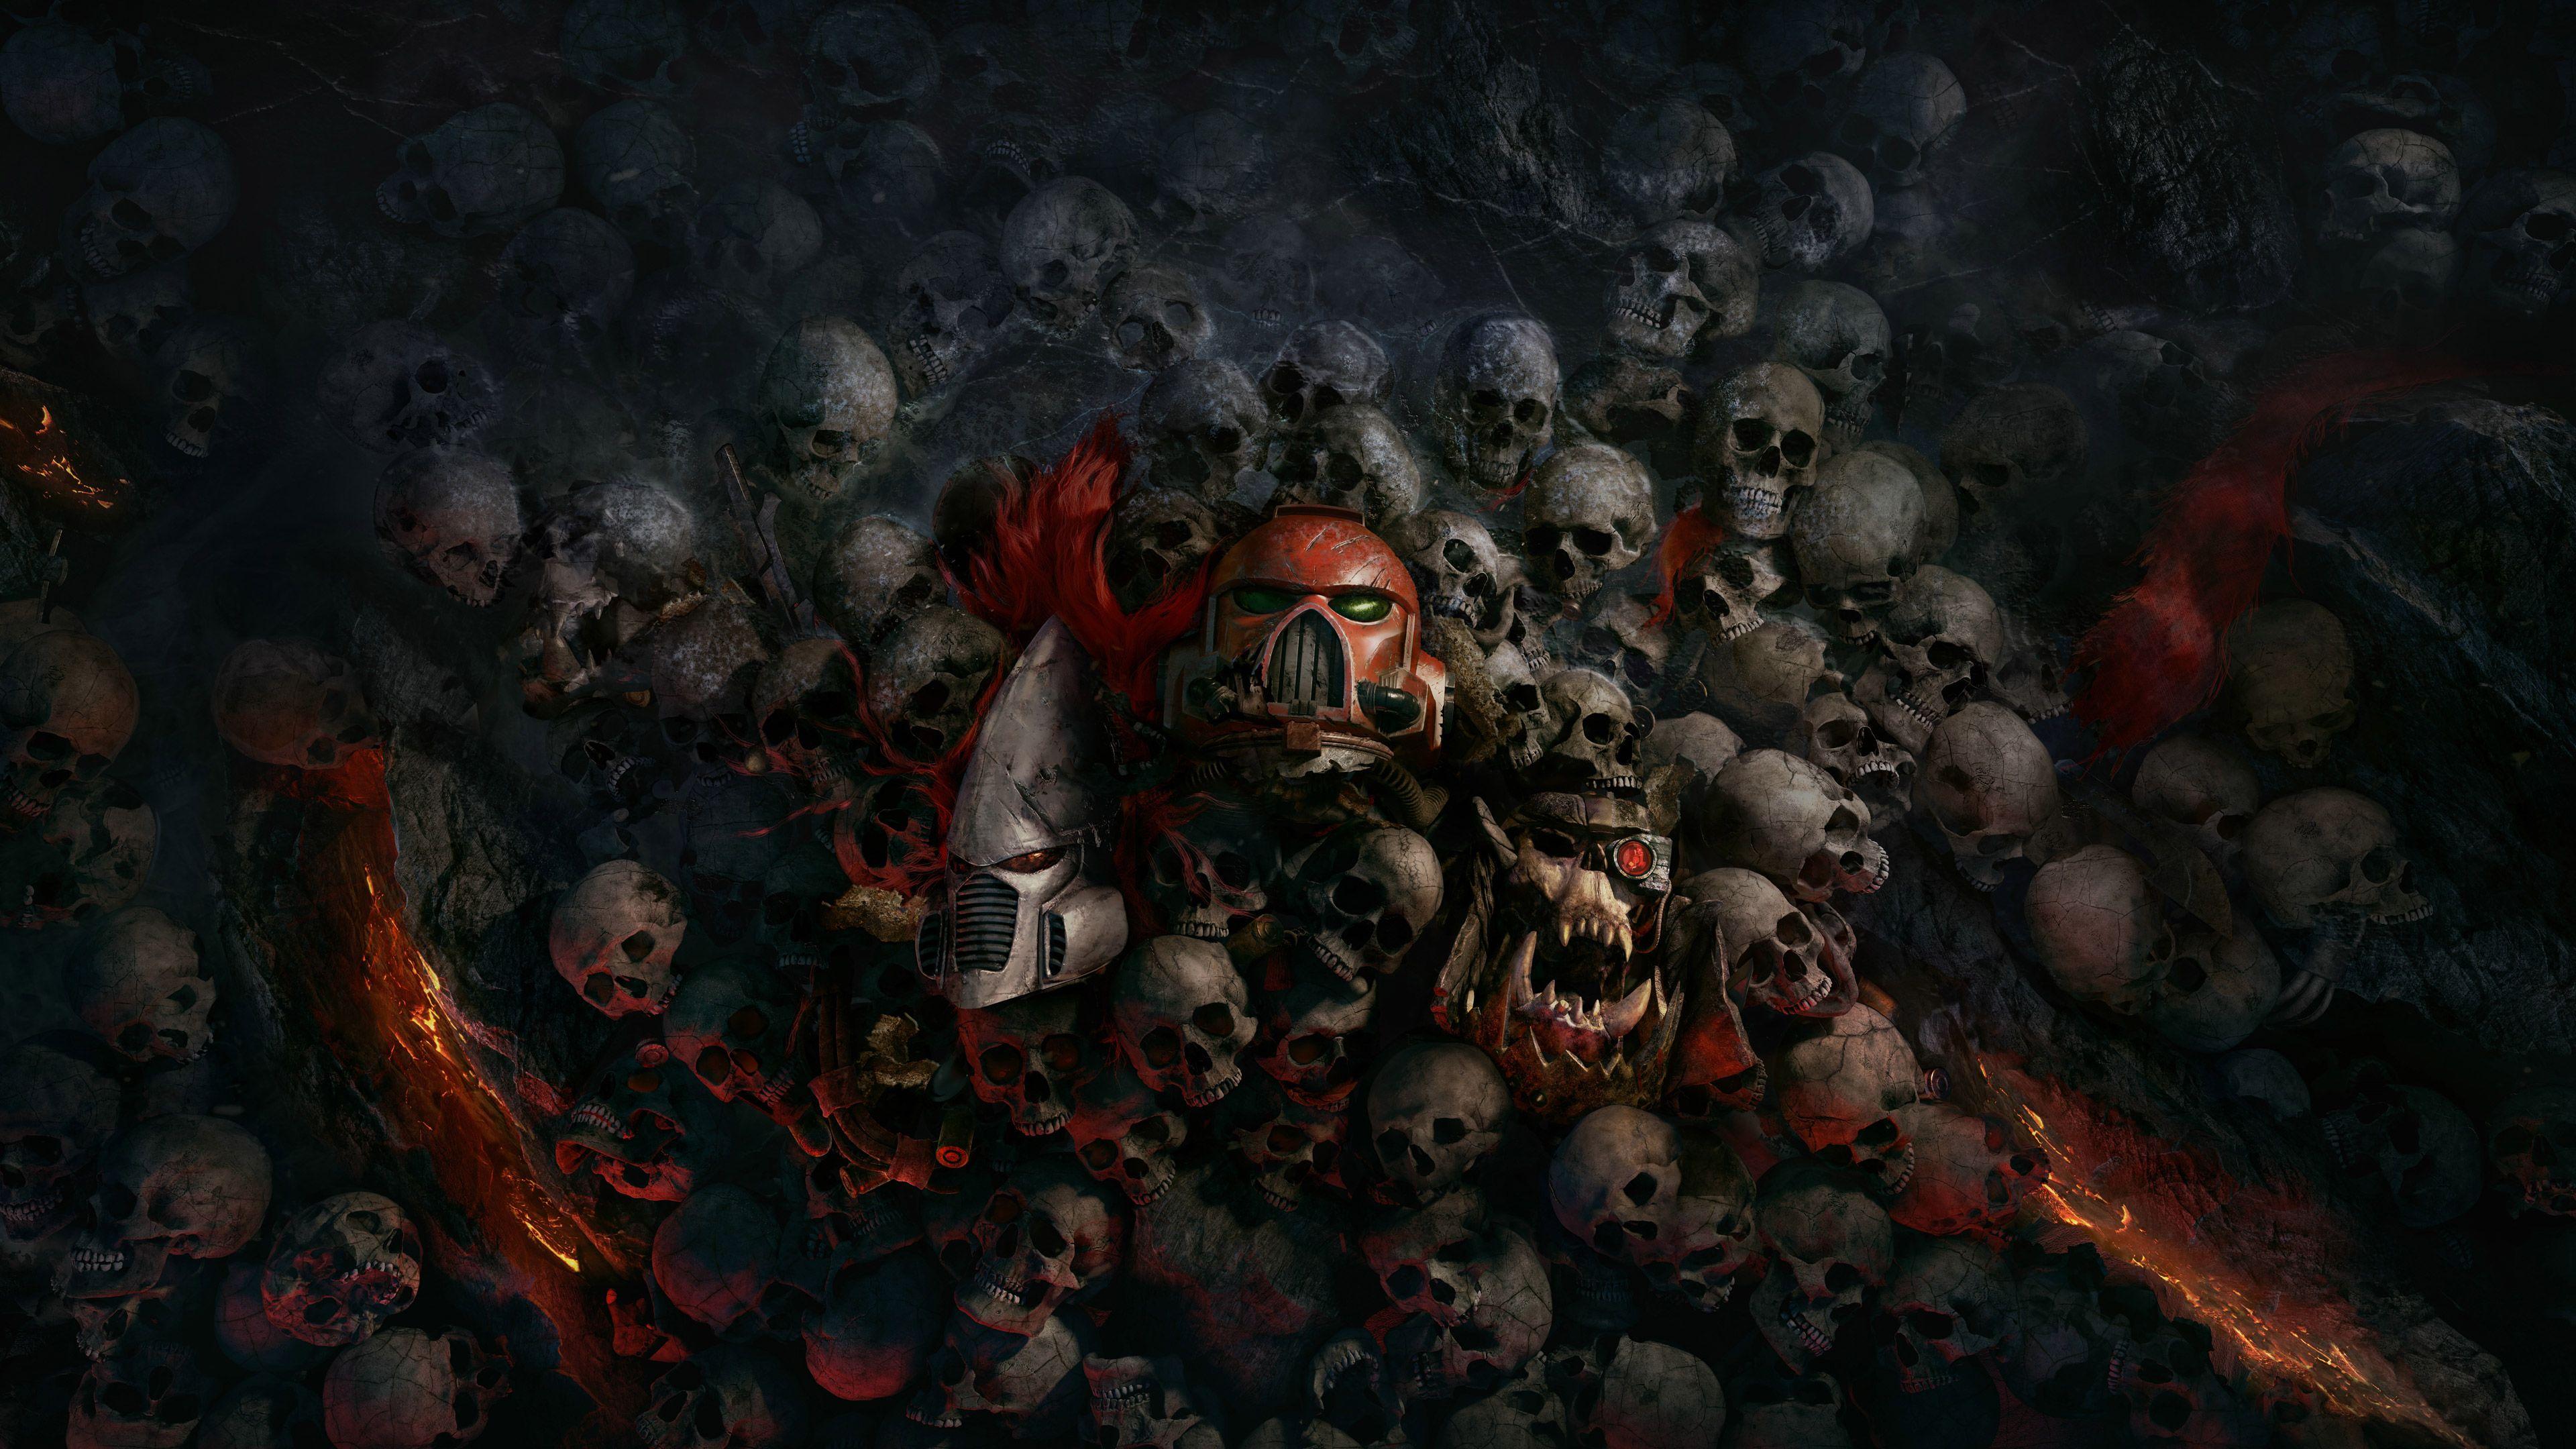 Skulls 4k, HD Others, 4k Wallpaper, Image, Background, Photo